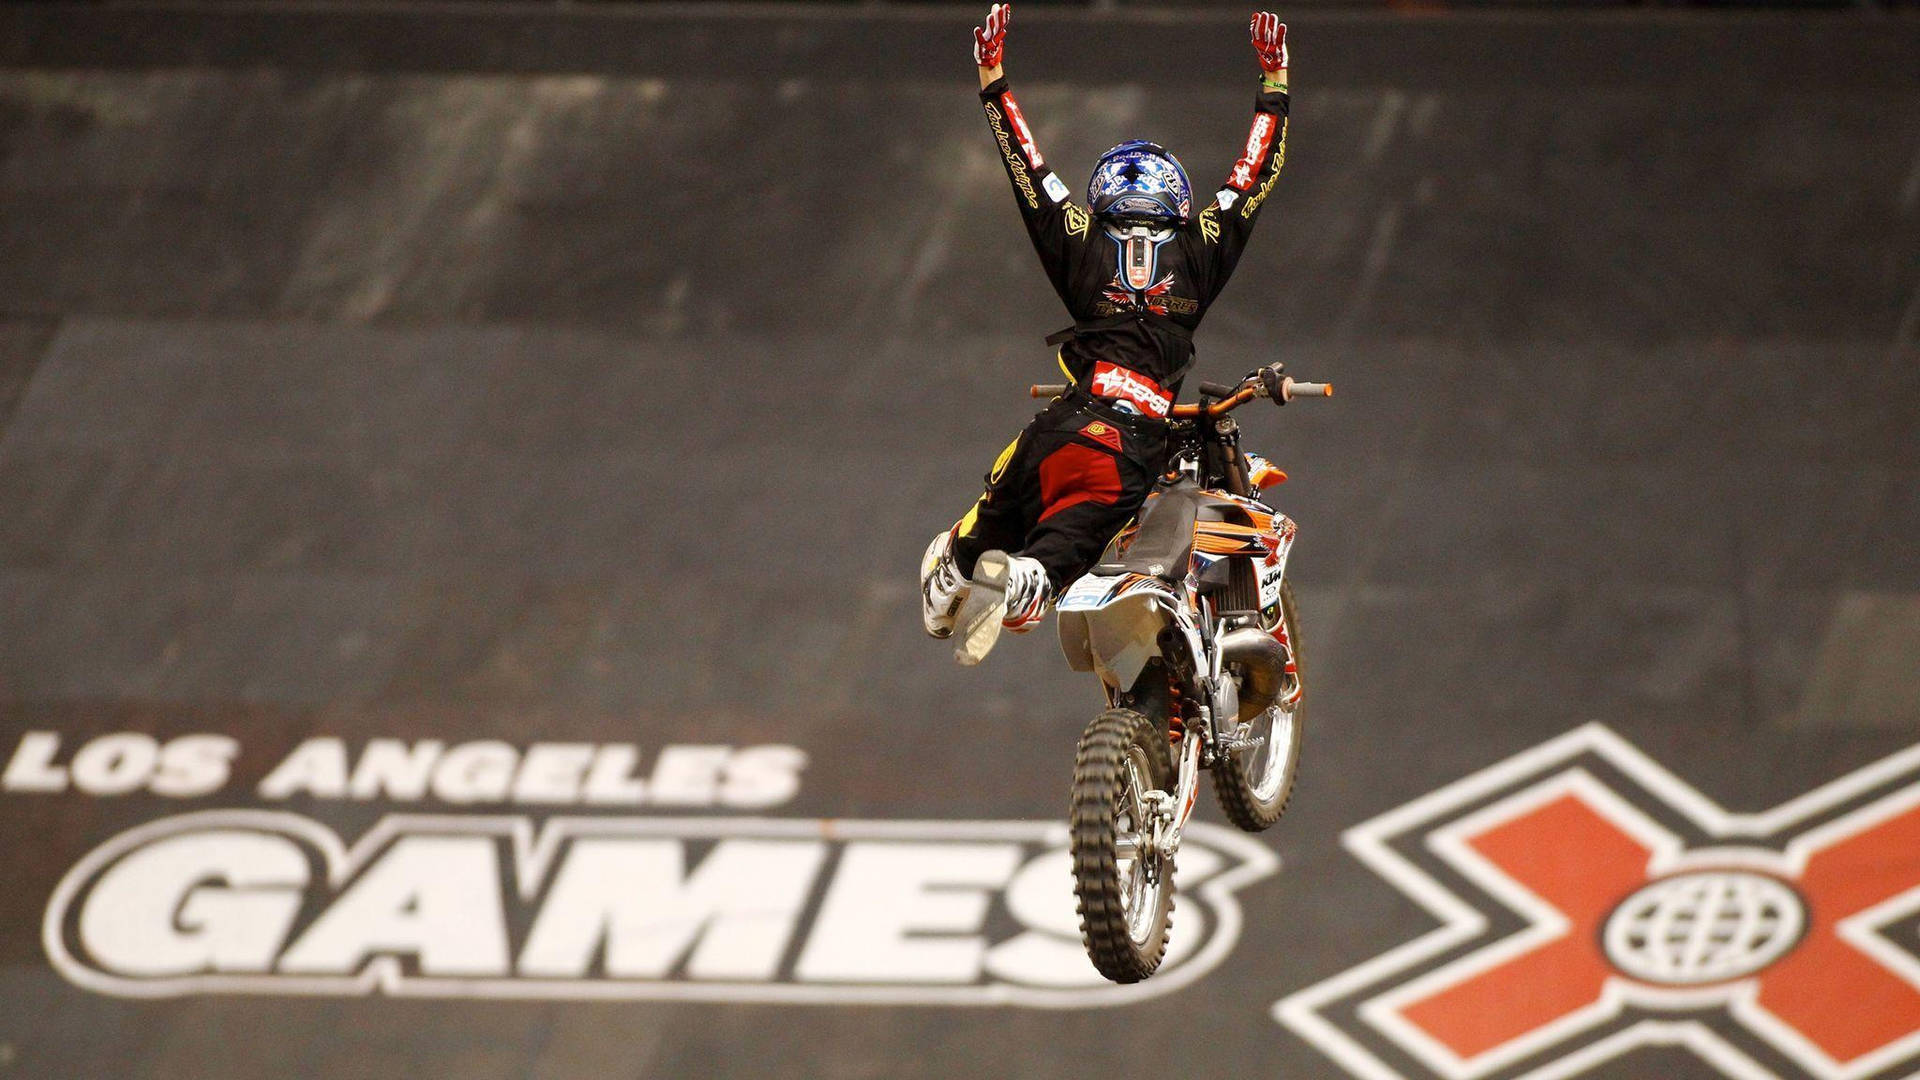 X Games Motocross No-hand Stunt Wallpaper